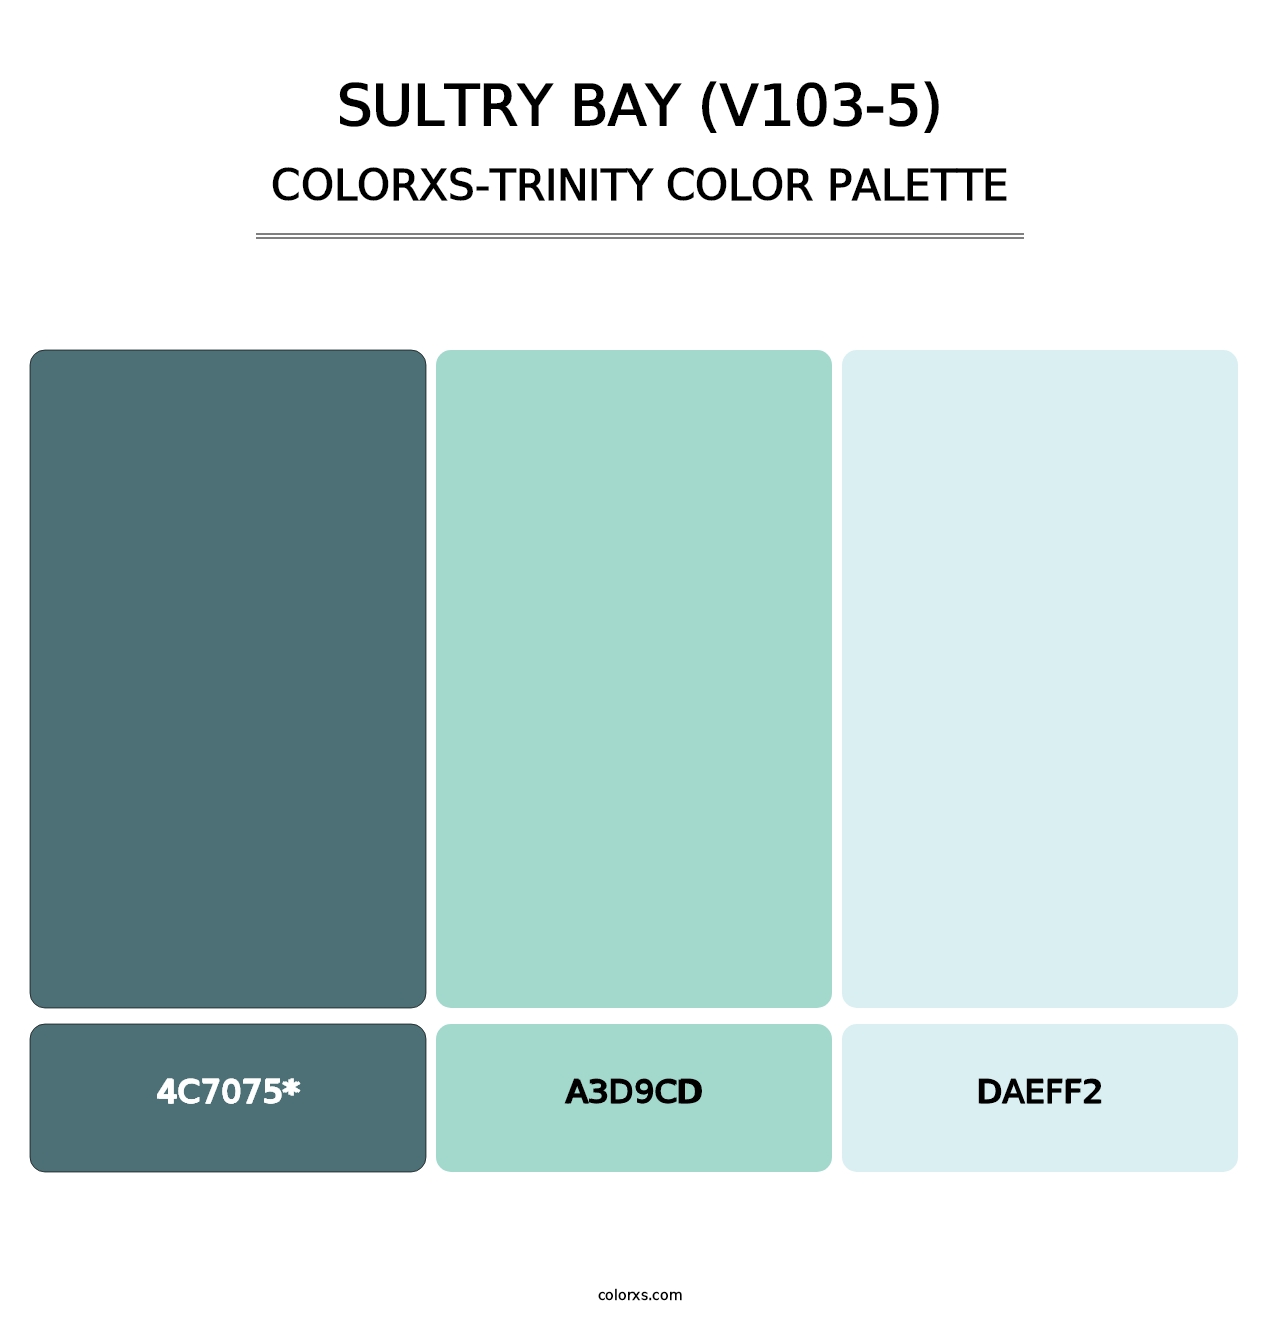 Sultry Bay (V103-5) - Colorxs Trinity Palette